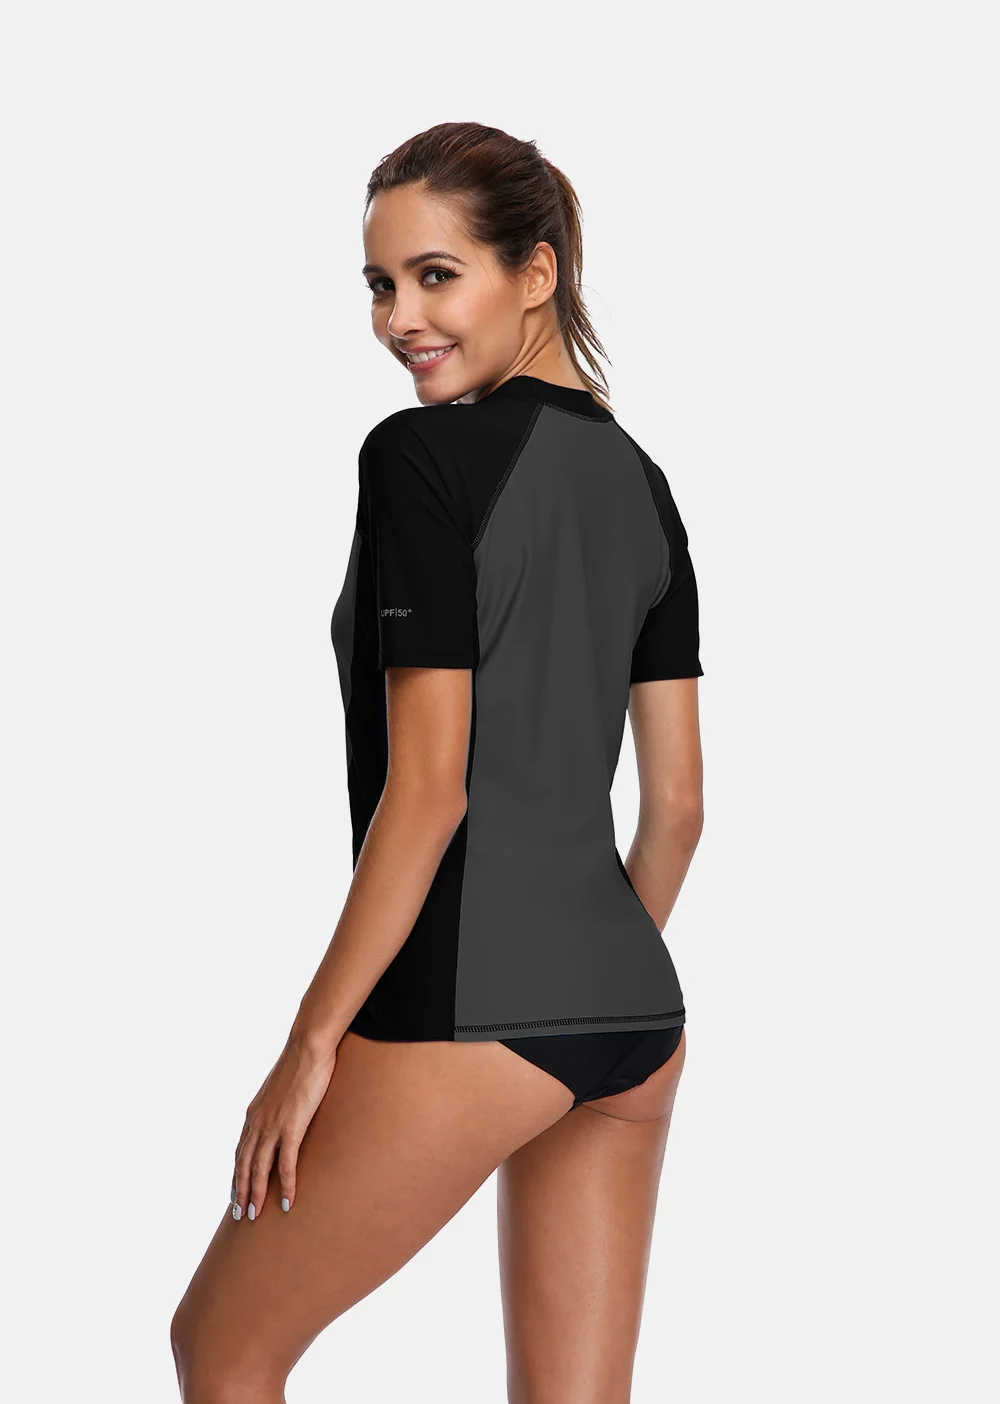 Charmo, женские рубашки с коротким рукавом, Рашгард, купальник для серфинга, топ UPF 50+, рубашка для бега, велосипедная рубашка, купальник, костюм для серфинга